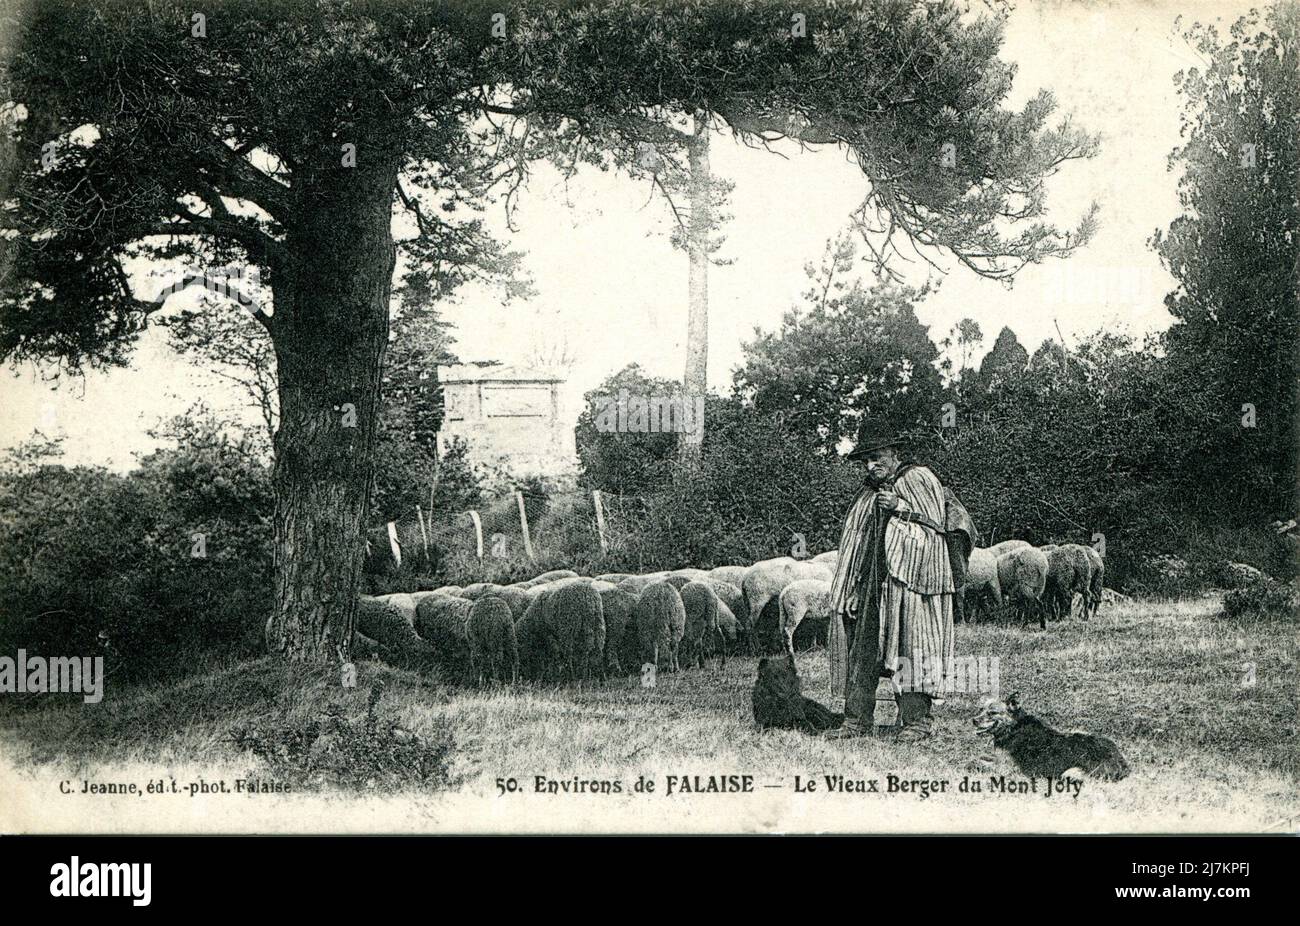 Mont-Joly, le vieux berger Abteilung: 14 - Calvados Region: Normandie (ehemals Basse-Normandie) Vintage-Postkarte, Ende 19. - Anfang 20. Jahrhundert Stockfoto